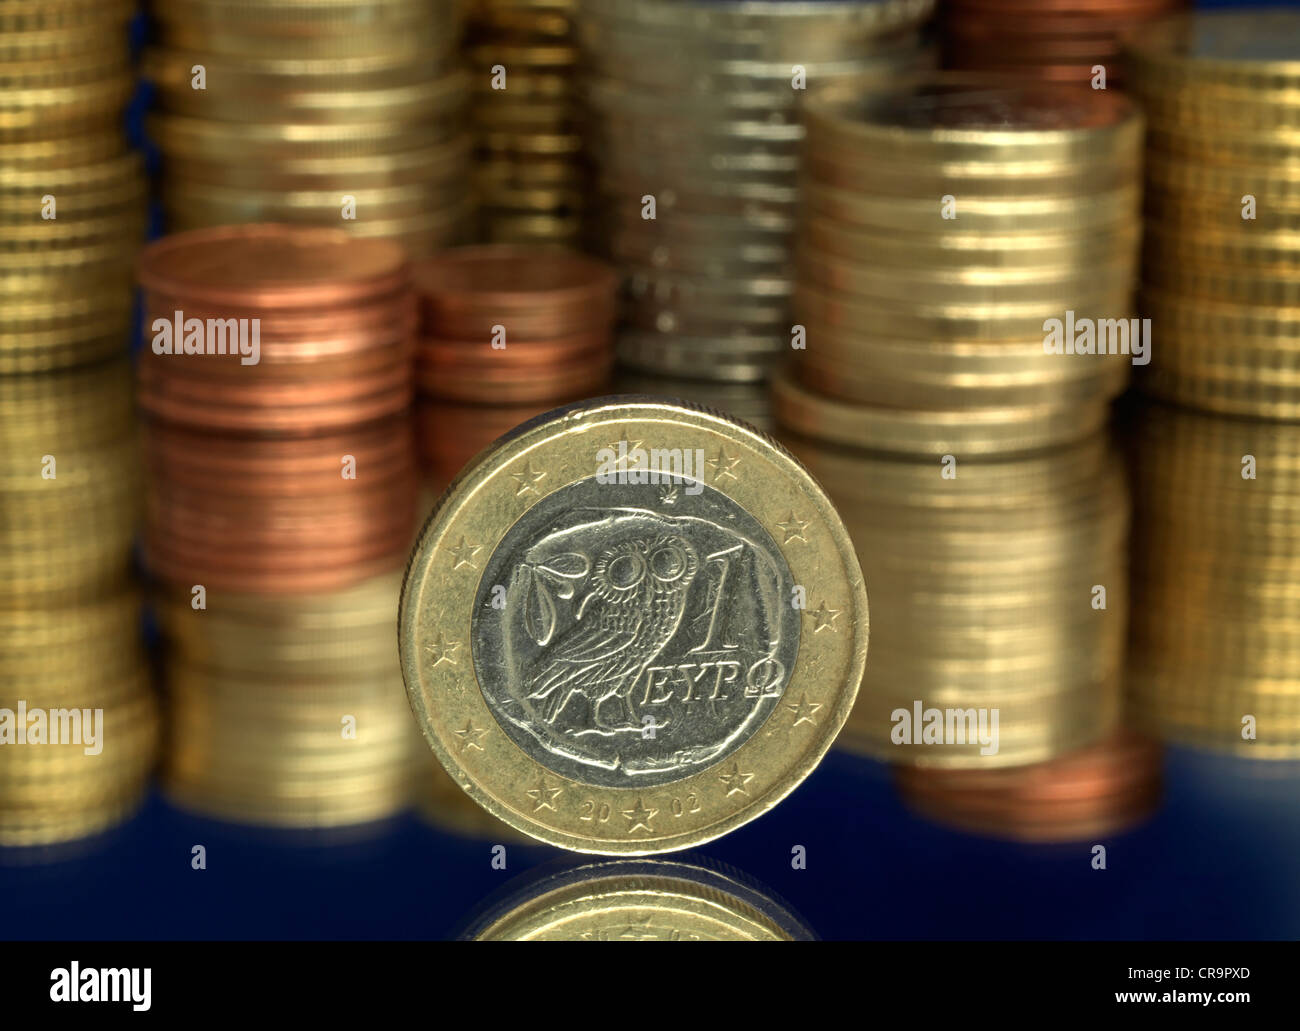 currency devaluation Greek Euro Griechenland Euro from Greek griechischer Euro Euroabwertung currency devaluation depreciation Stock Photo